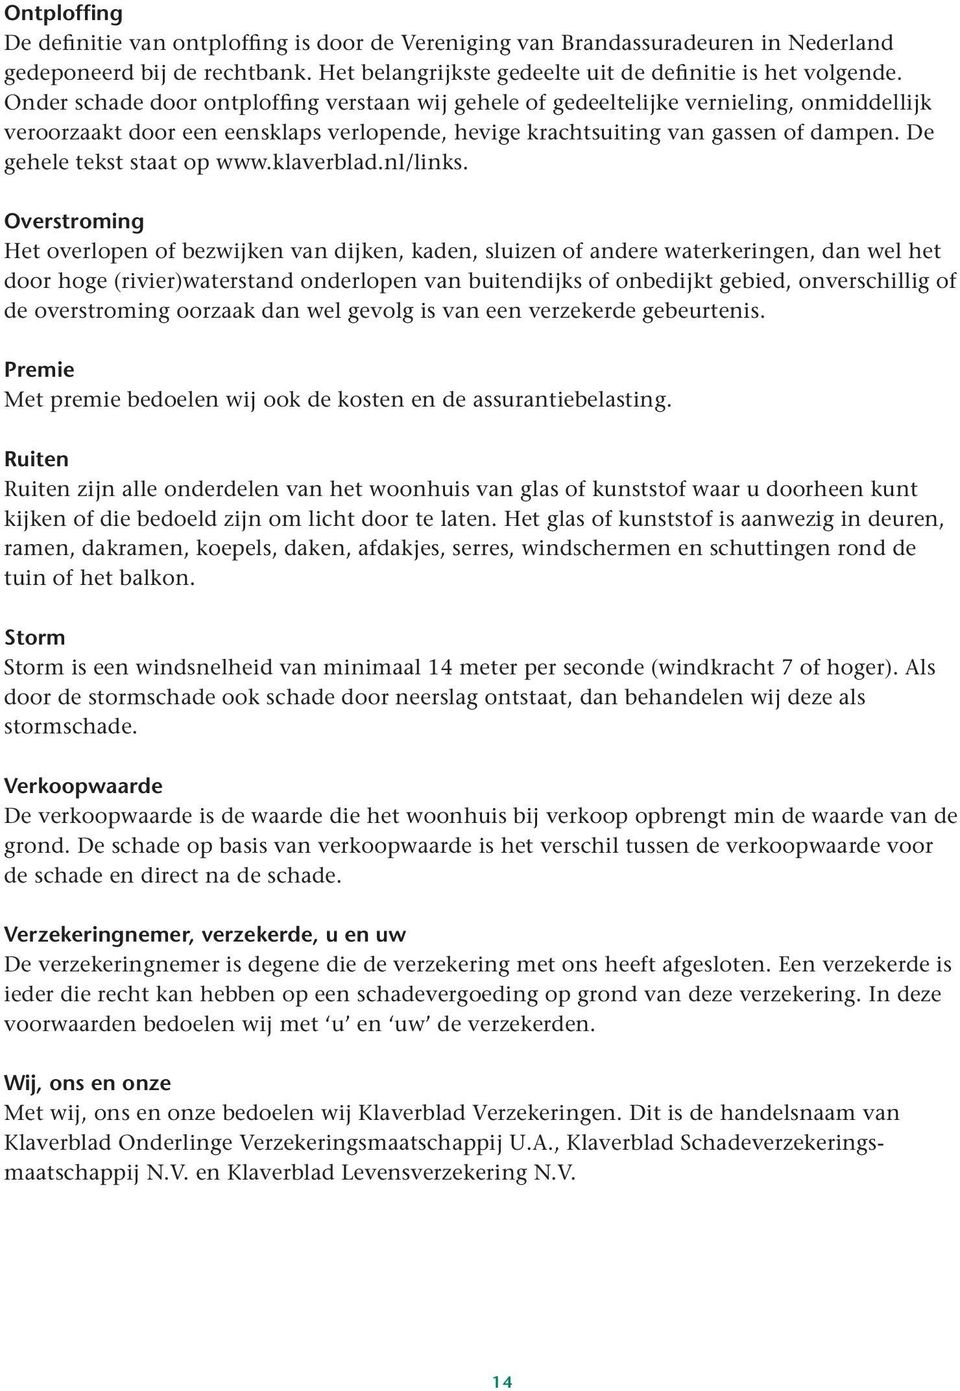 De gehele tekst staat op www.klaverblad.nl/links.